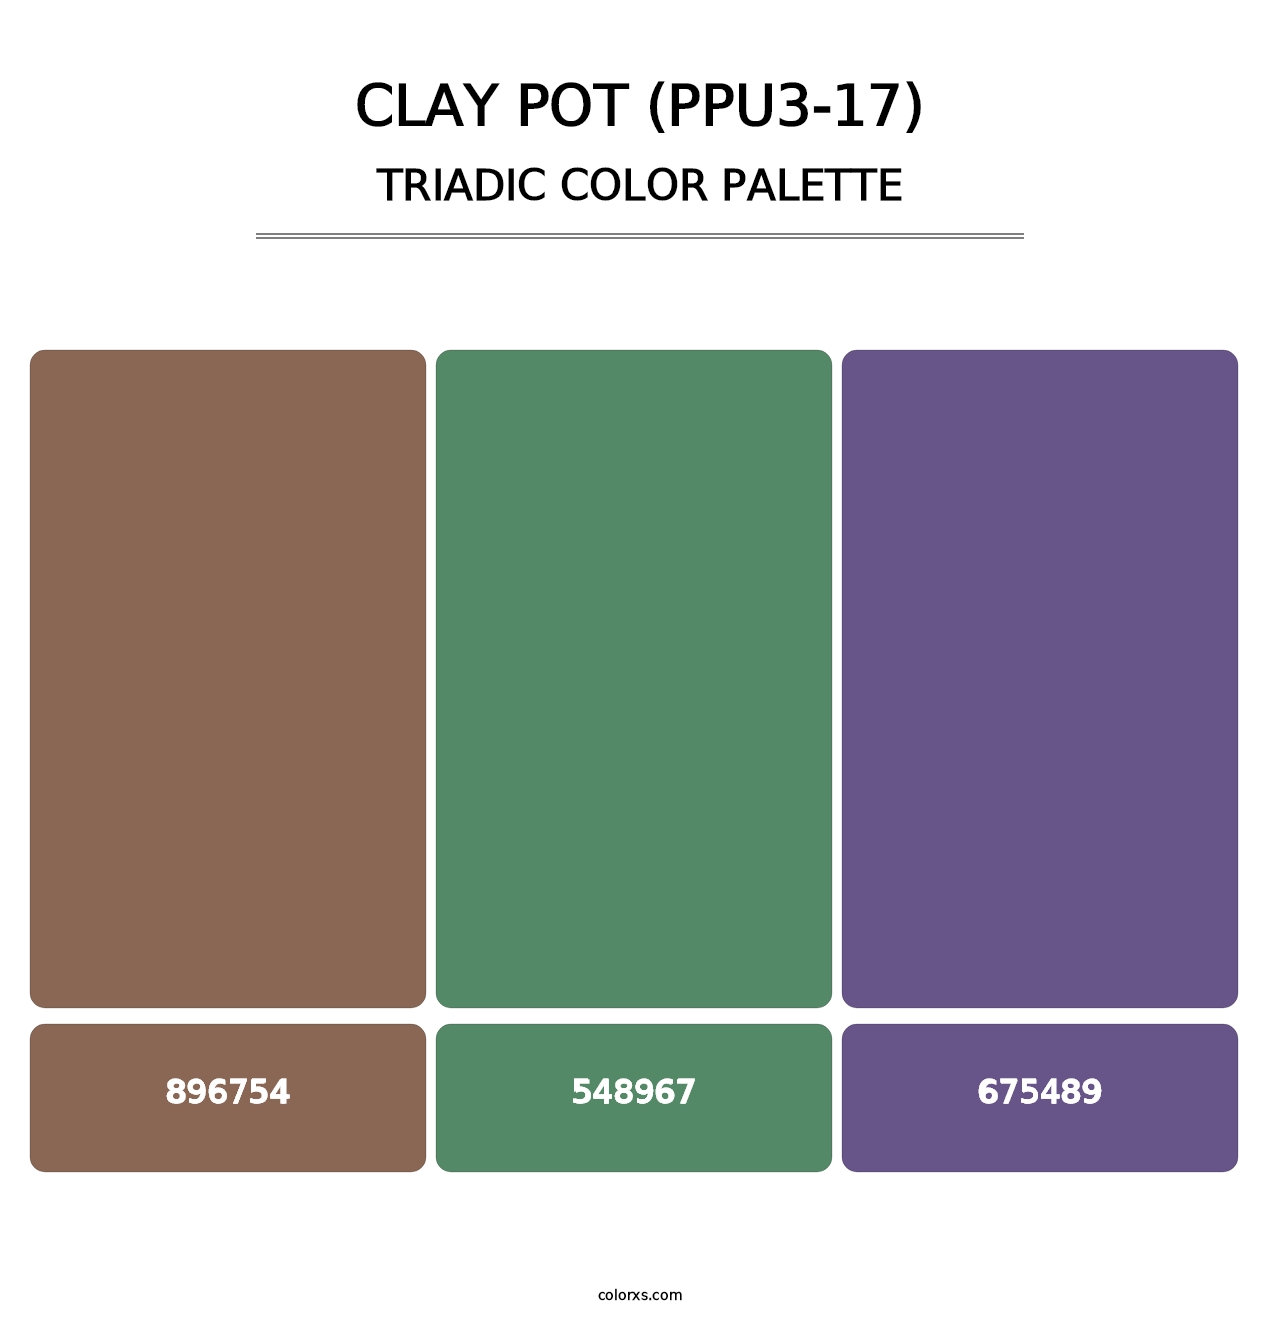 Clay Pot (PPU3-17) - Triadic Color Palette